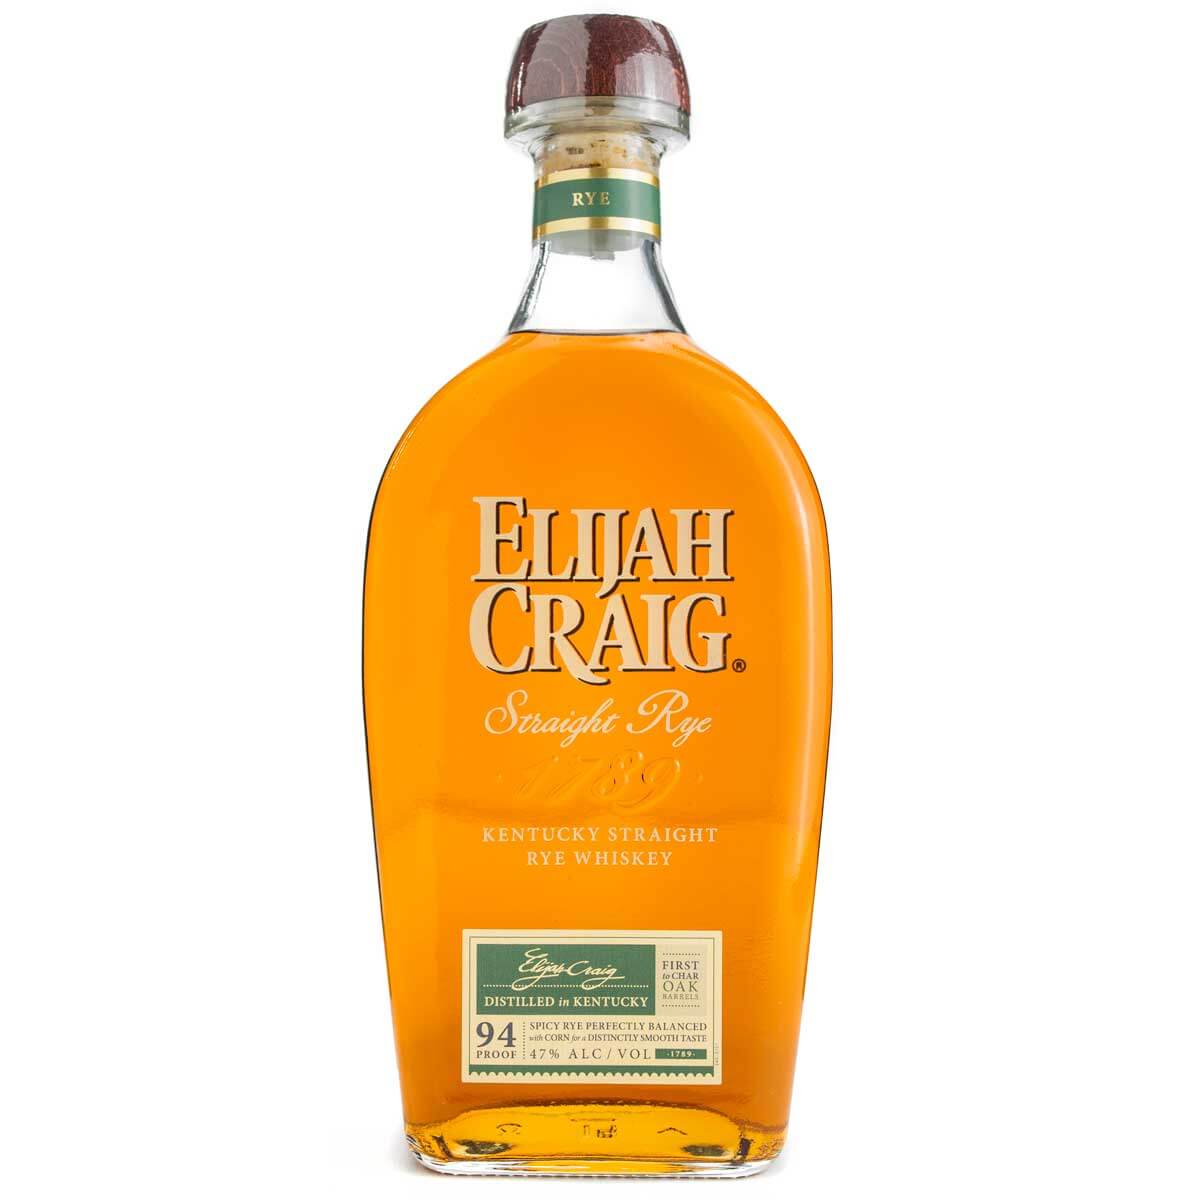 Elijah Craig Straight Rye bottle